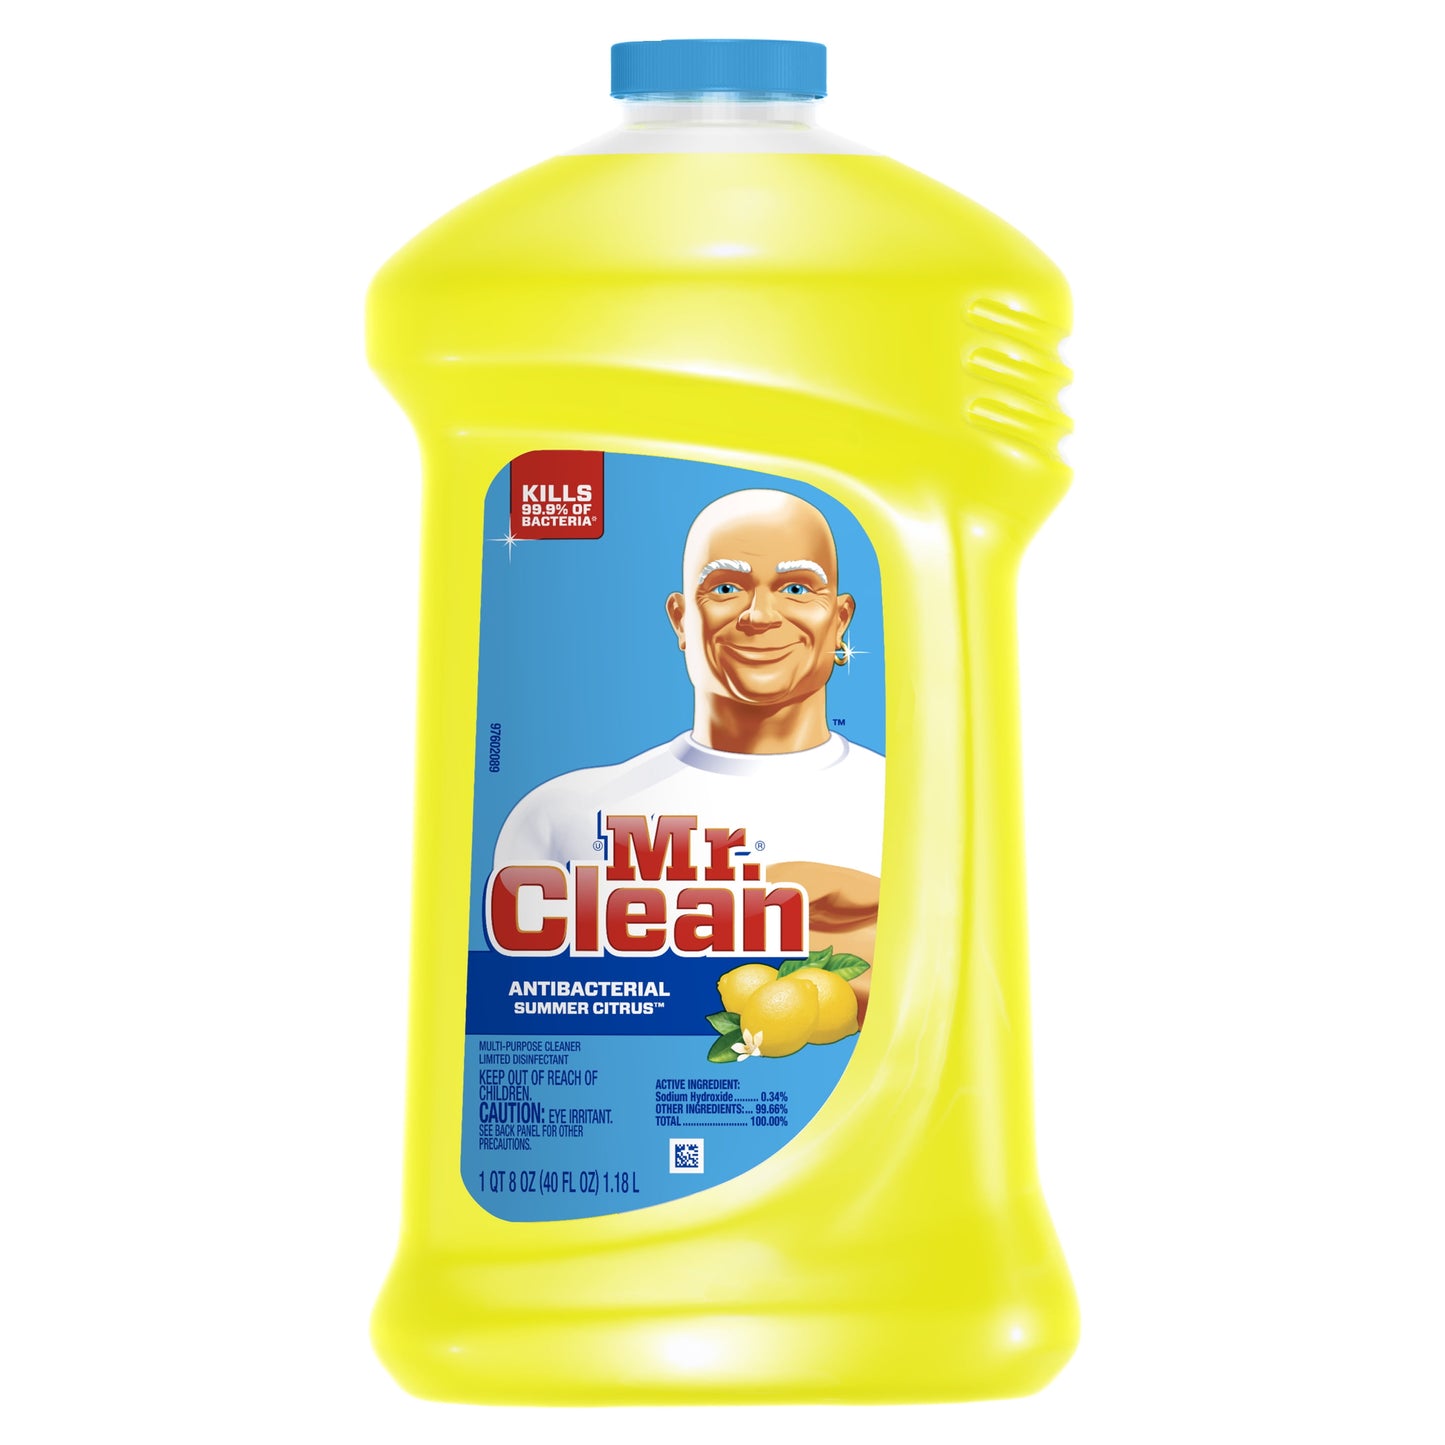 Mr. Clean Antibacterial Multi-Surface Cleaner, Summer Citrus, 40 fl oz